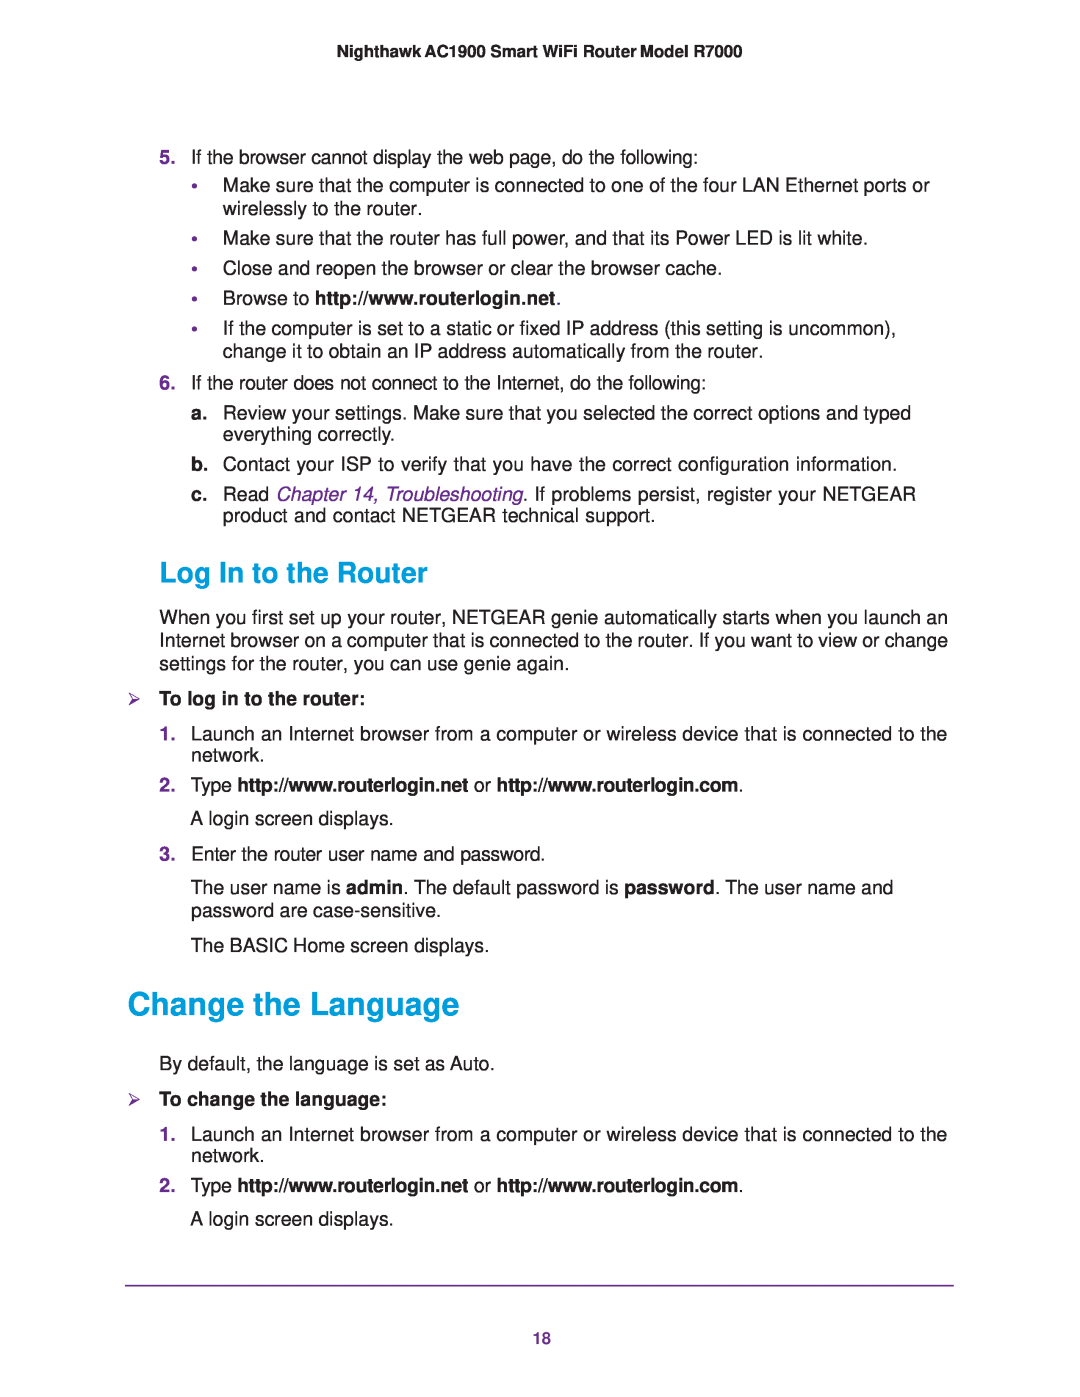 NETGEAR R7000 user manual Change the Language, Log In to the Router,  To log in to the router,  To change the language 